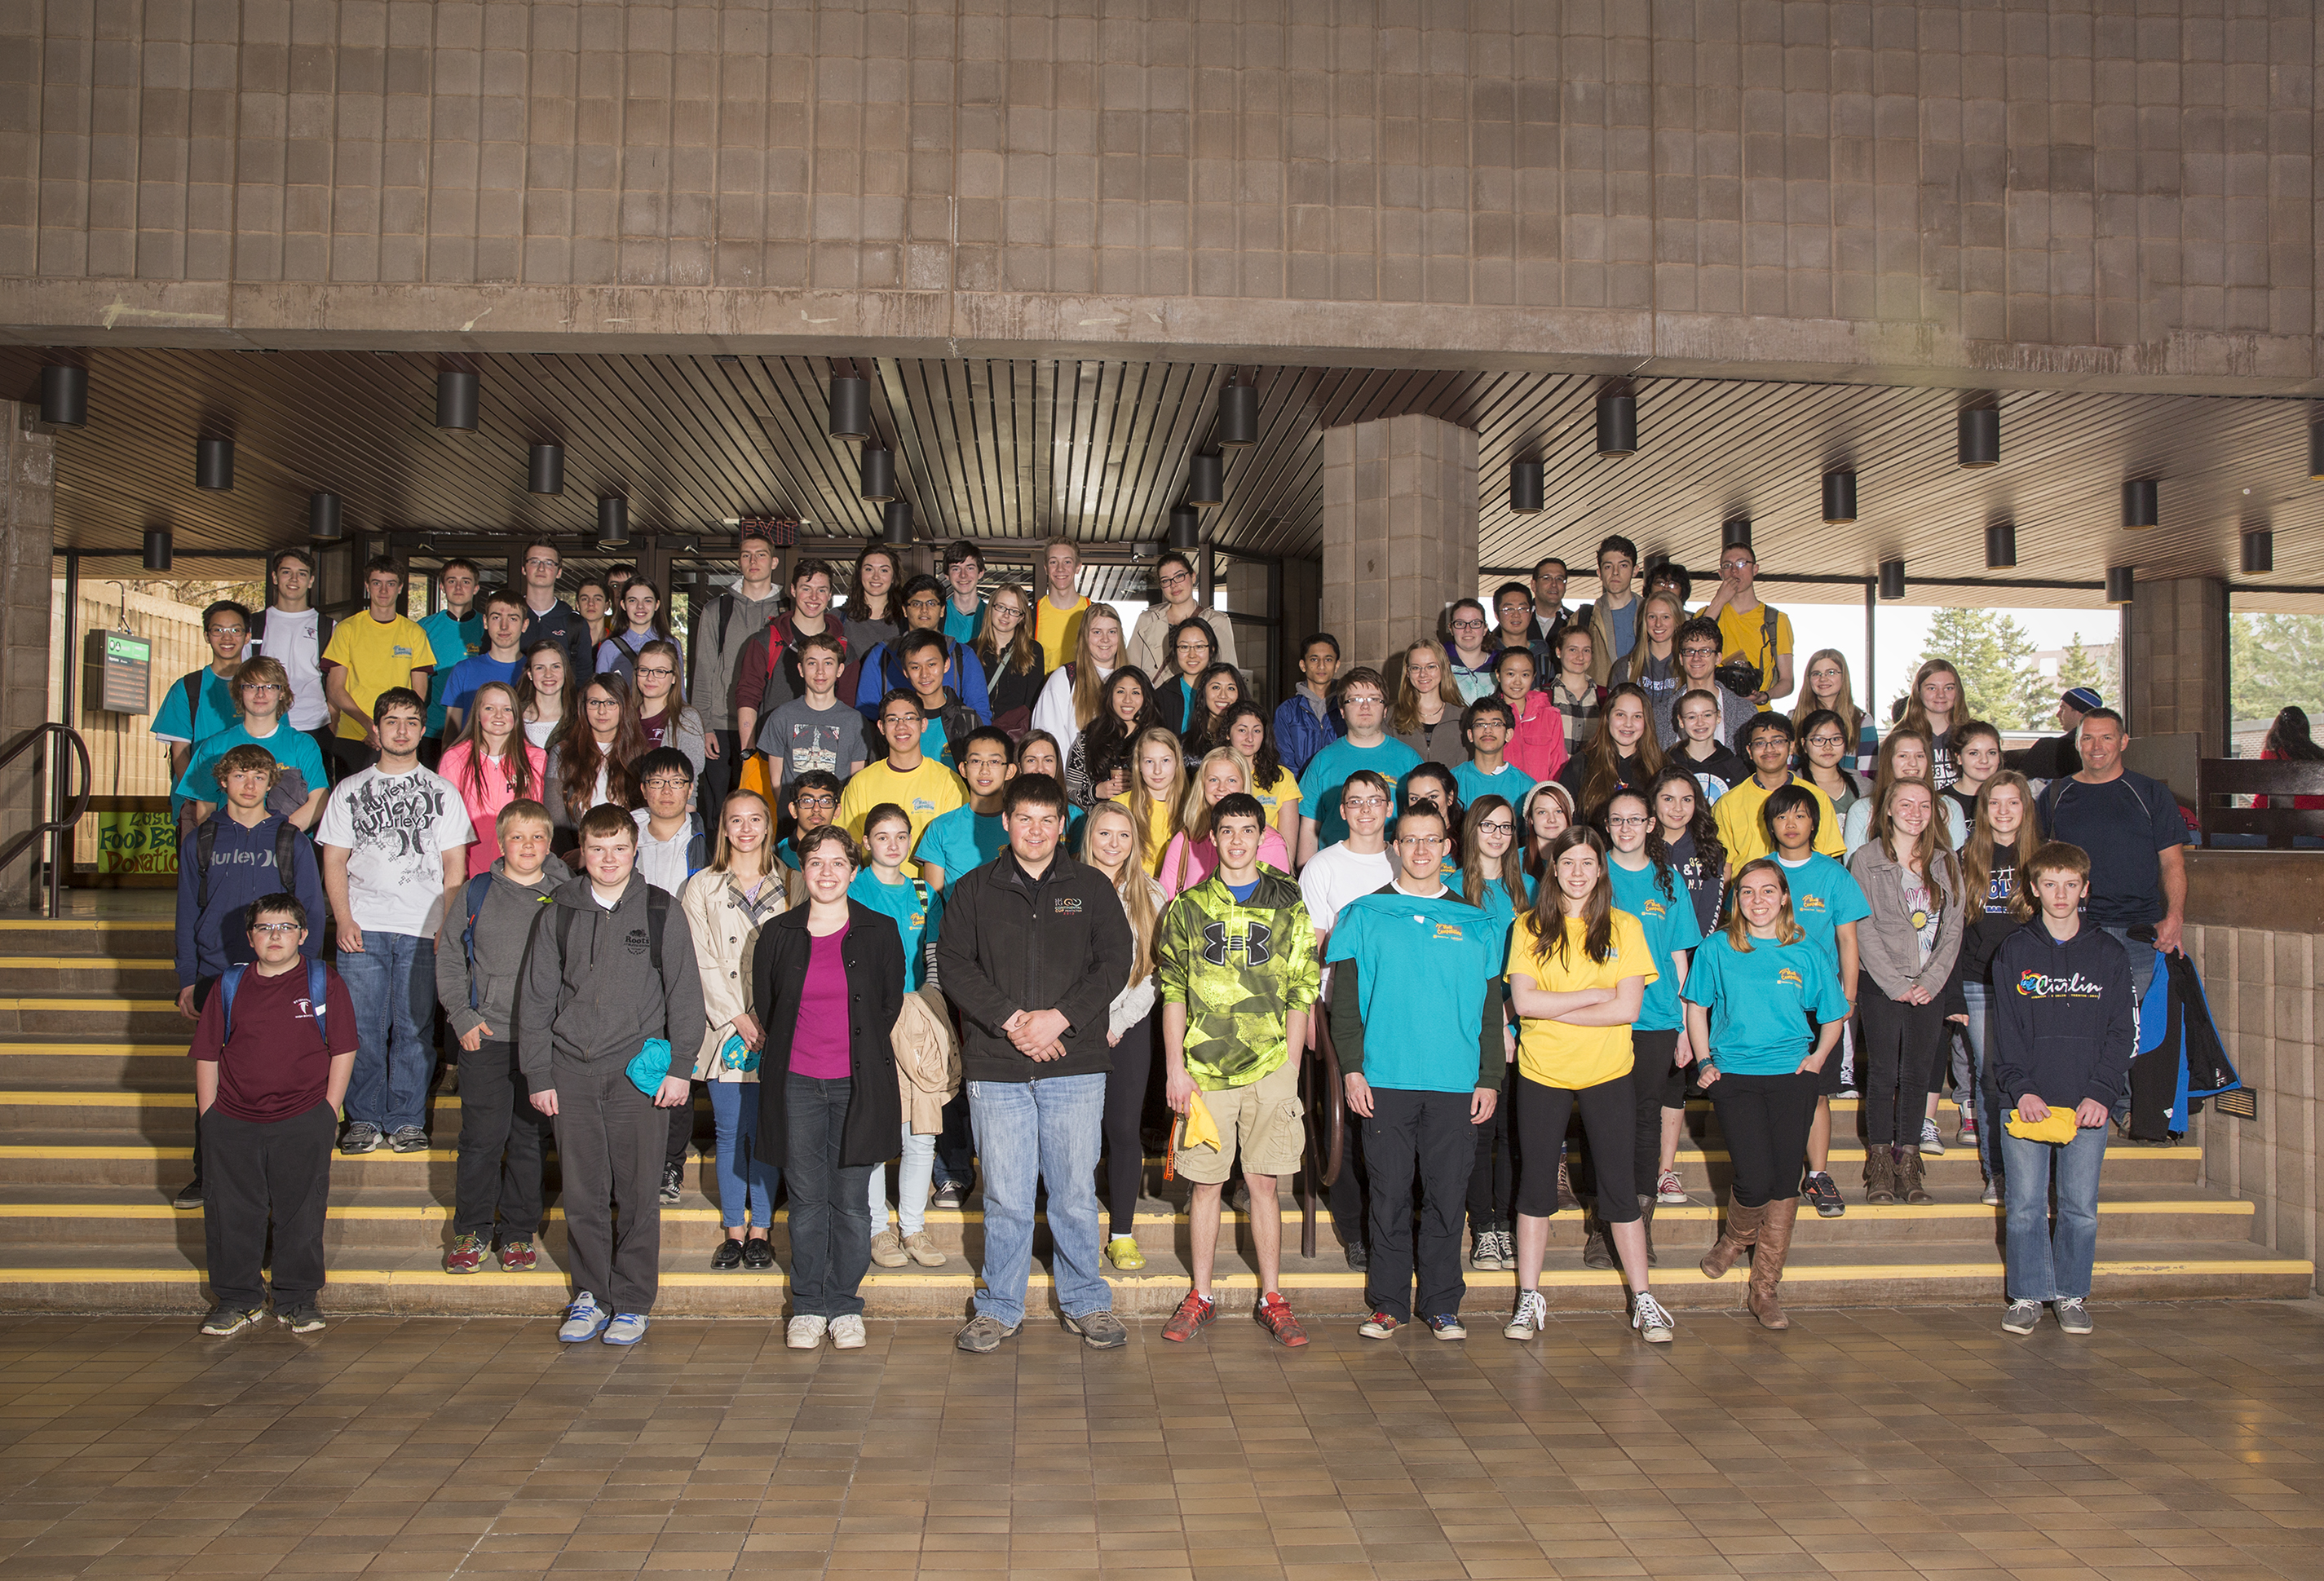 Group photo of the 2015 High School Mathematics contest